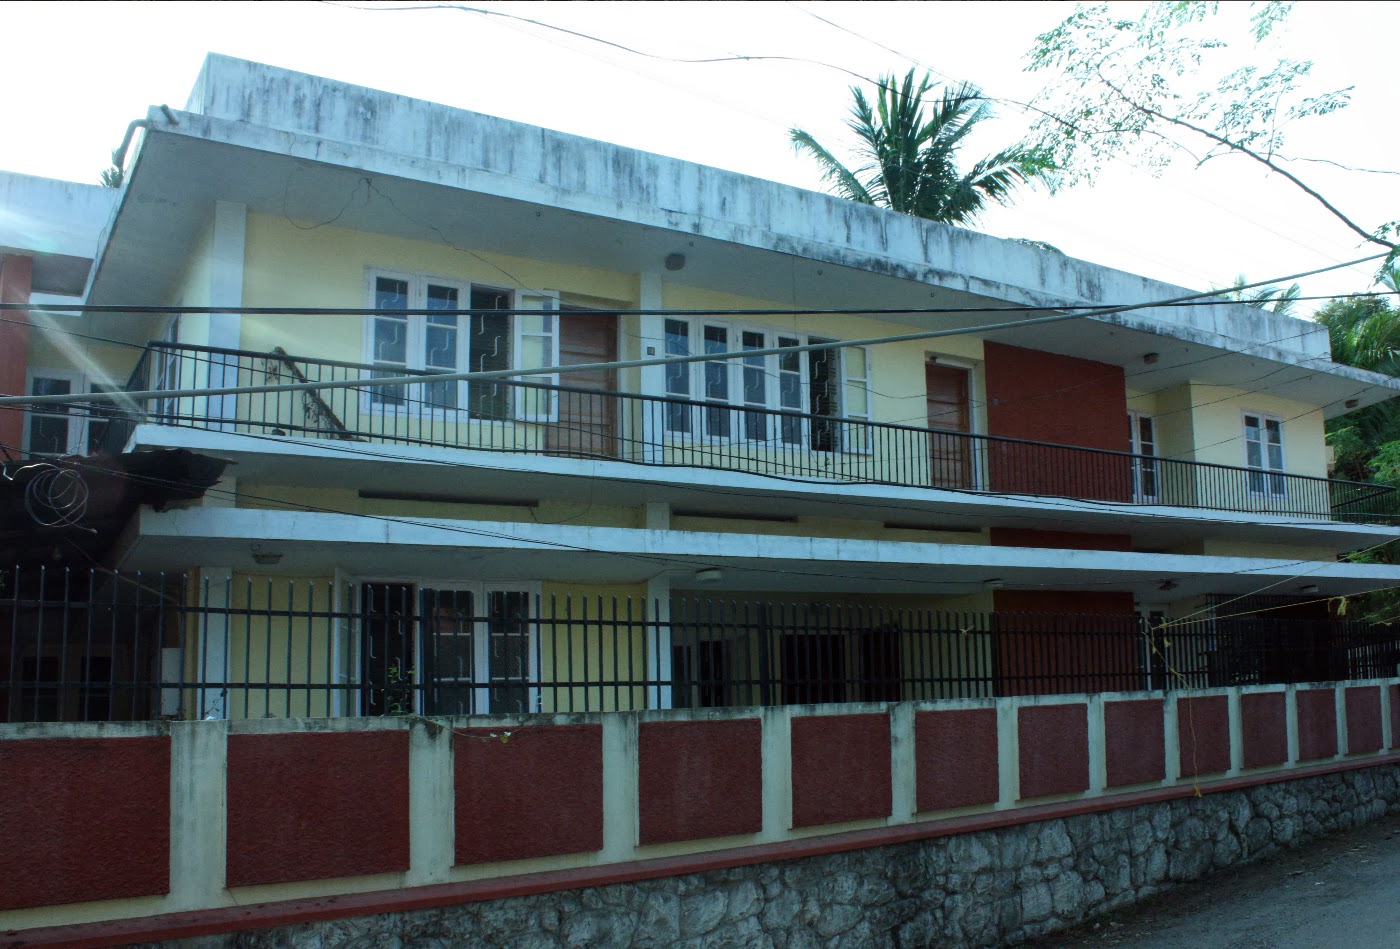 Old House Renovation Ideas Kerala